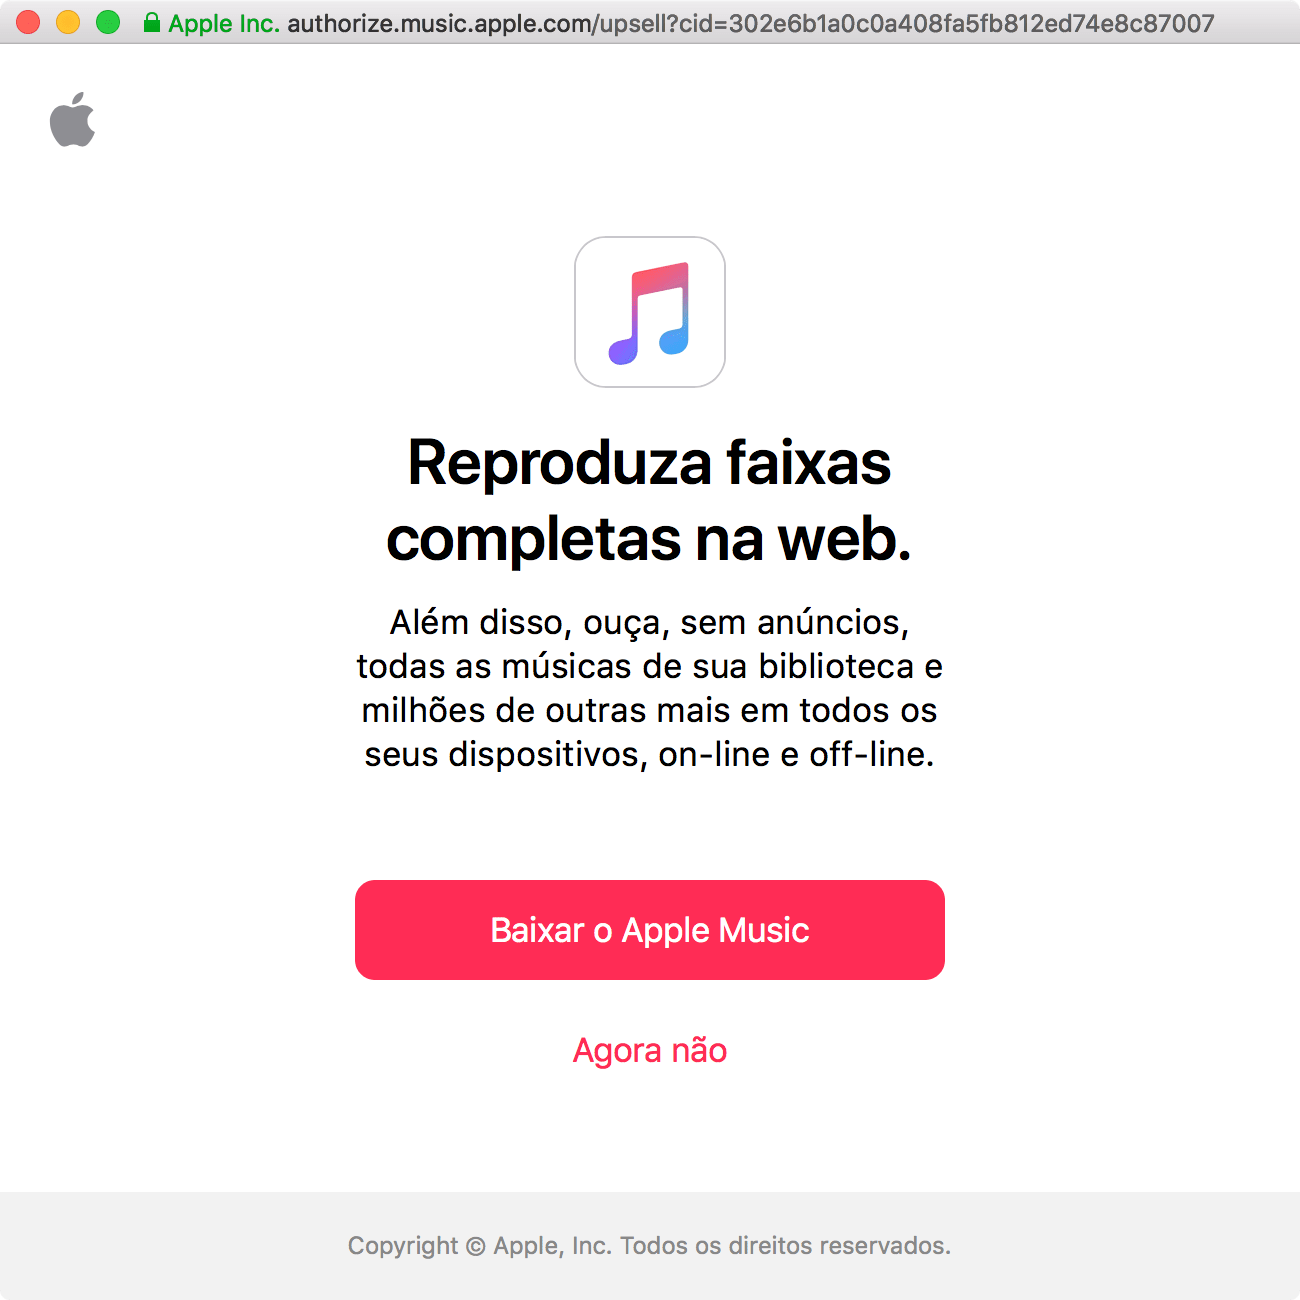 Apple Music on the web